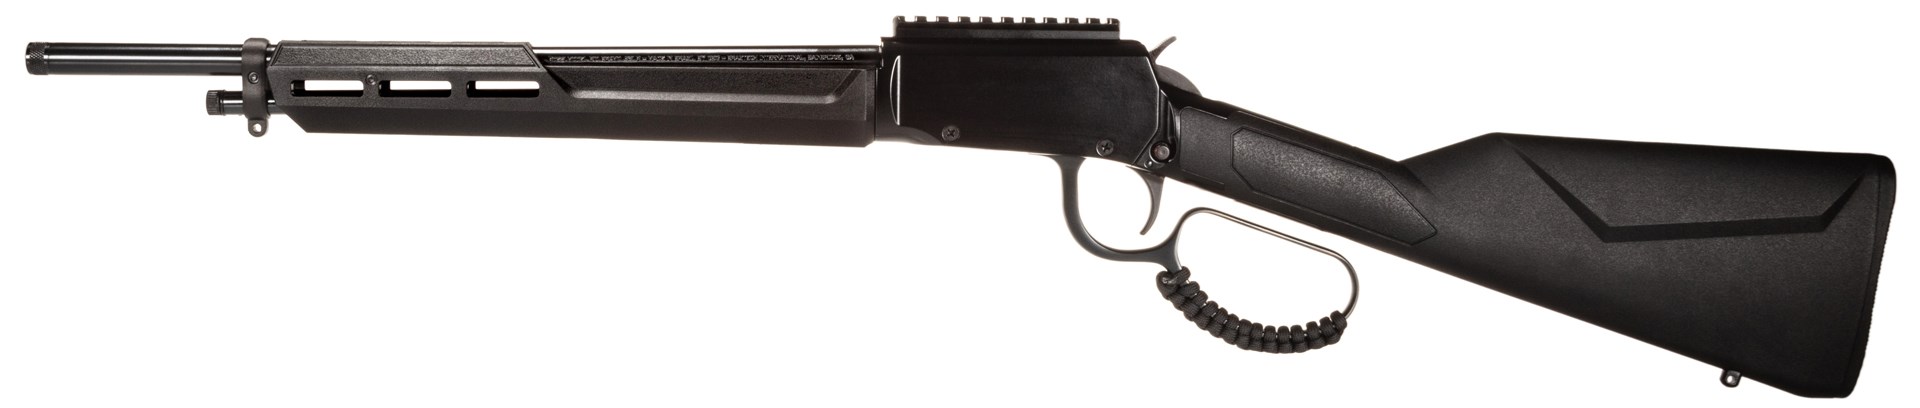 Left-side view lever-action rossi gun black stock rimfire .22 LR